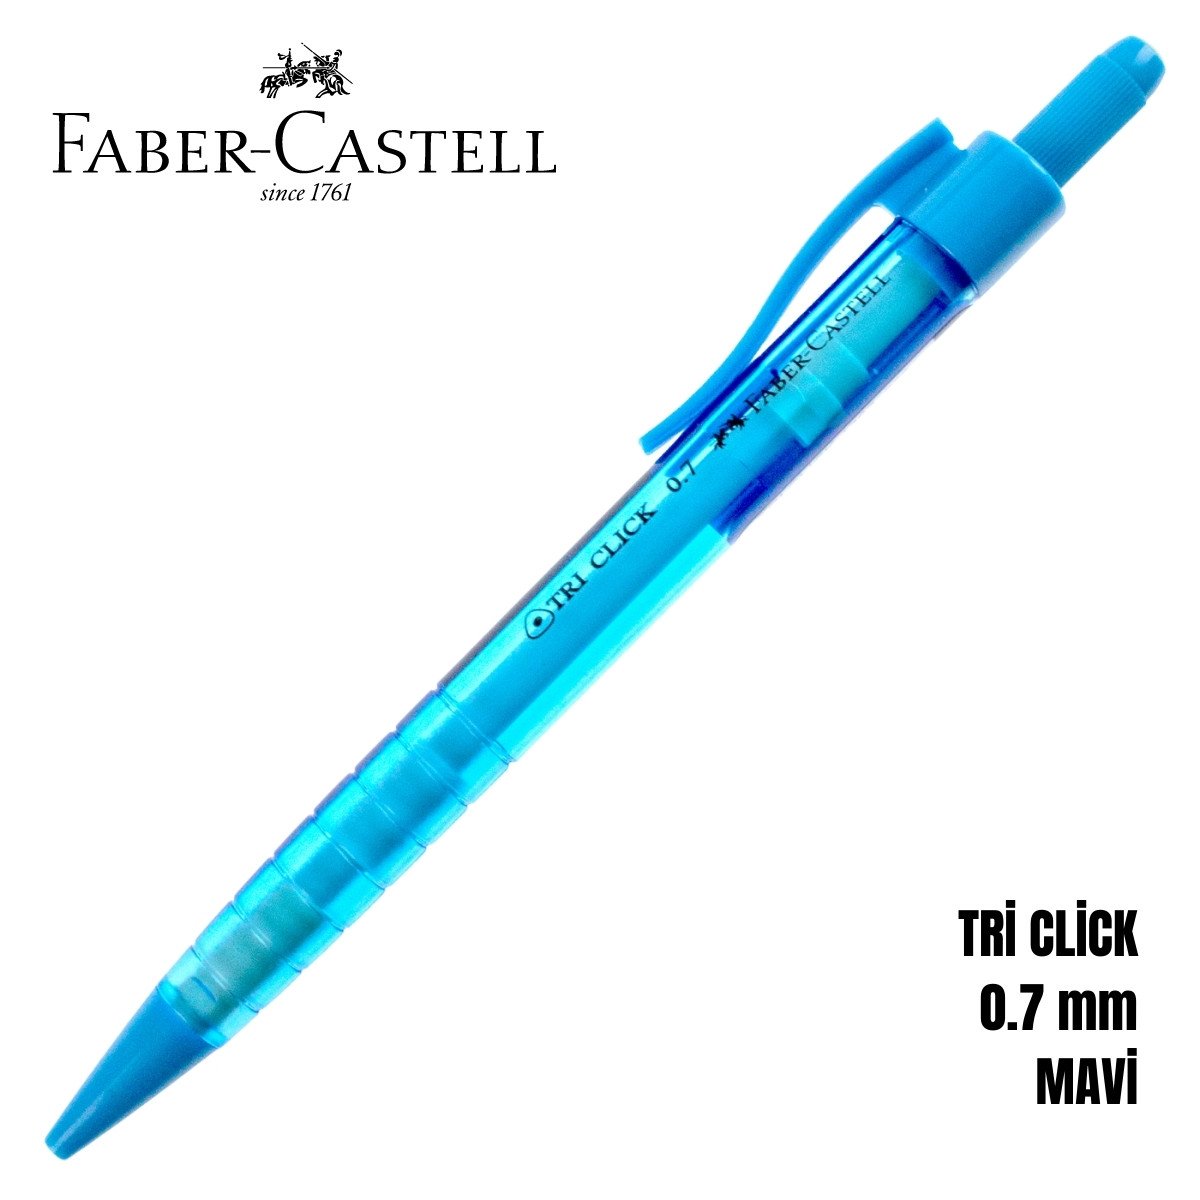 Faber-Castell Tri Click Versatil 0.7mm Mavi